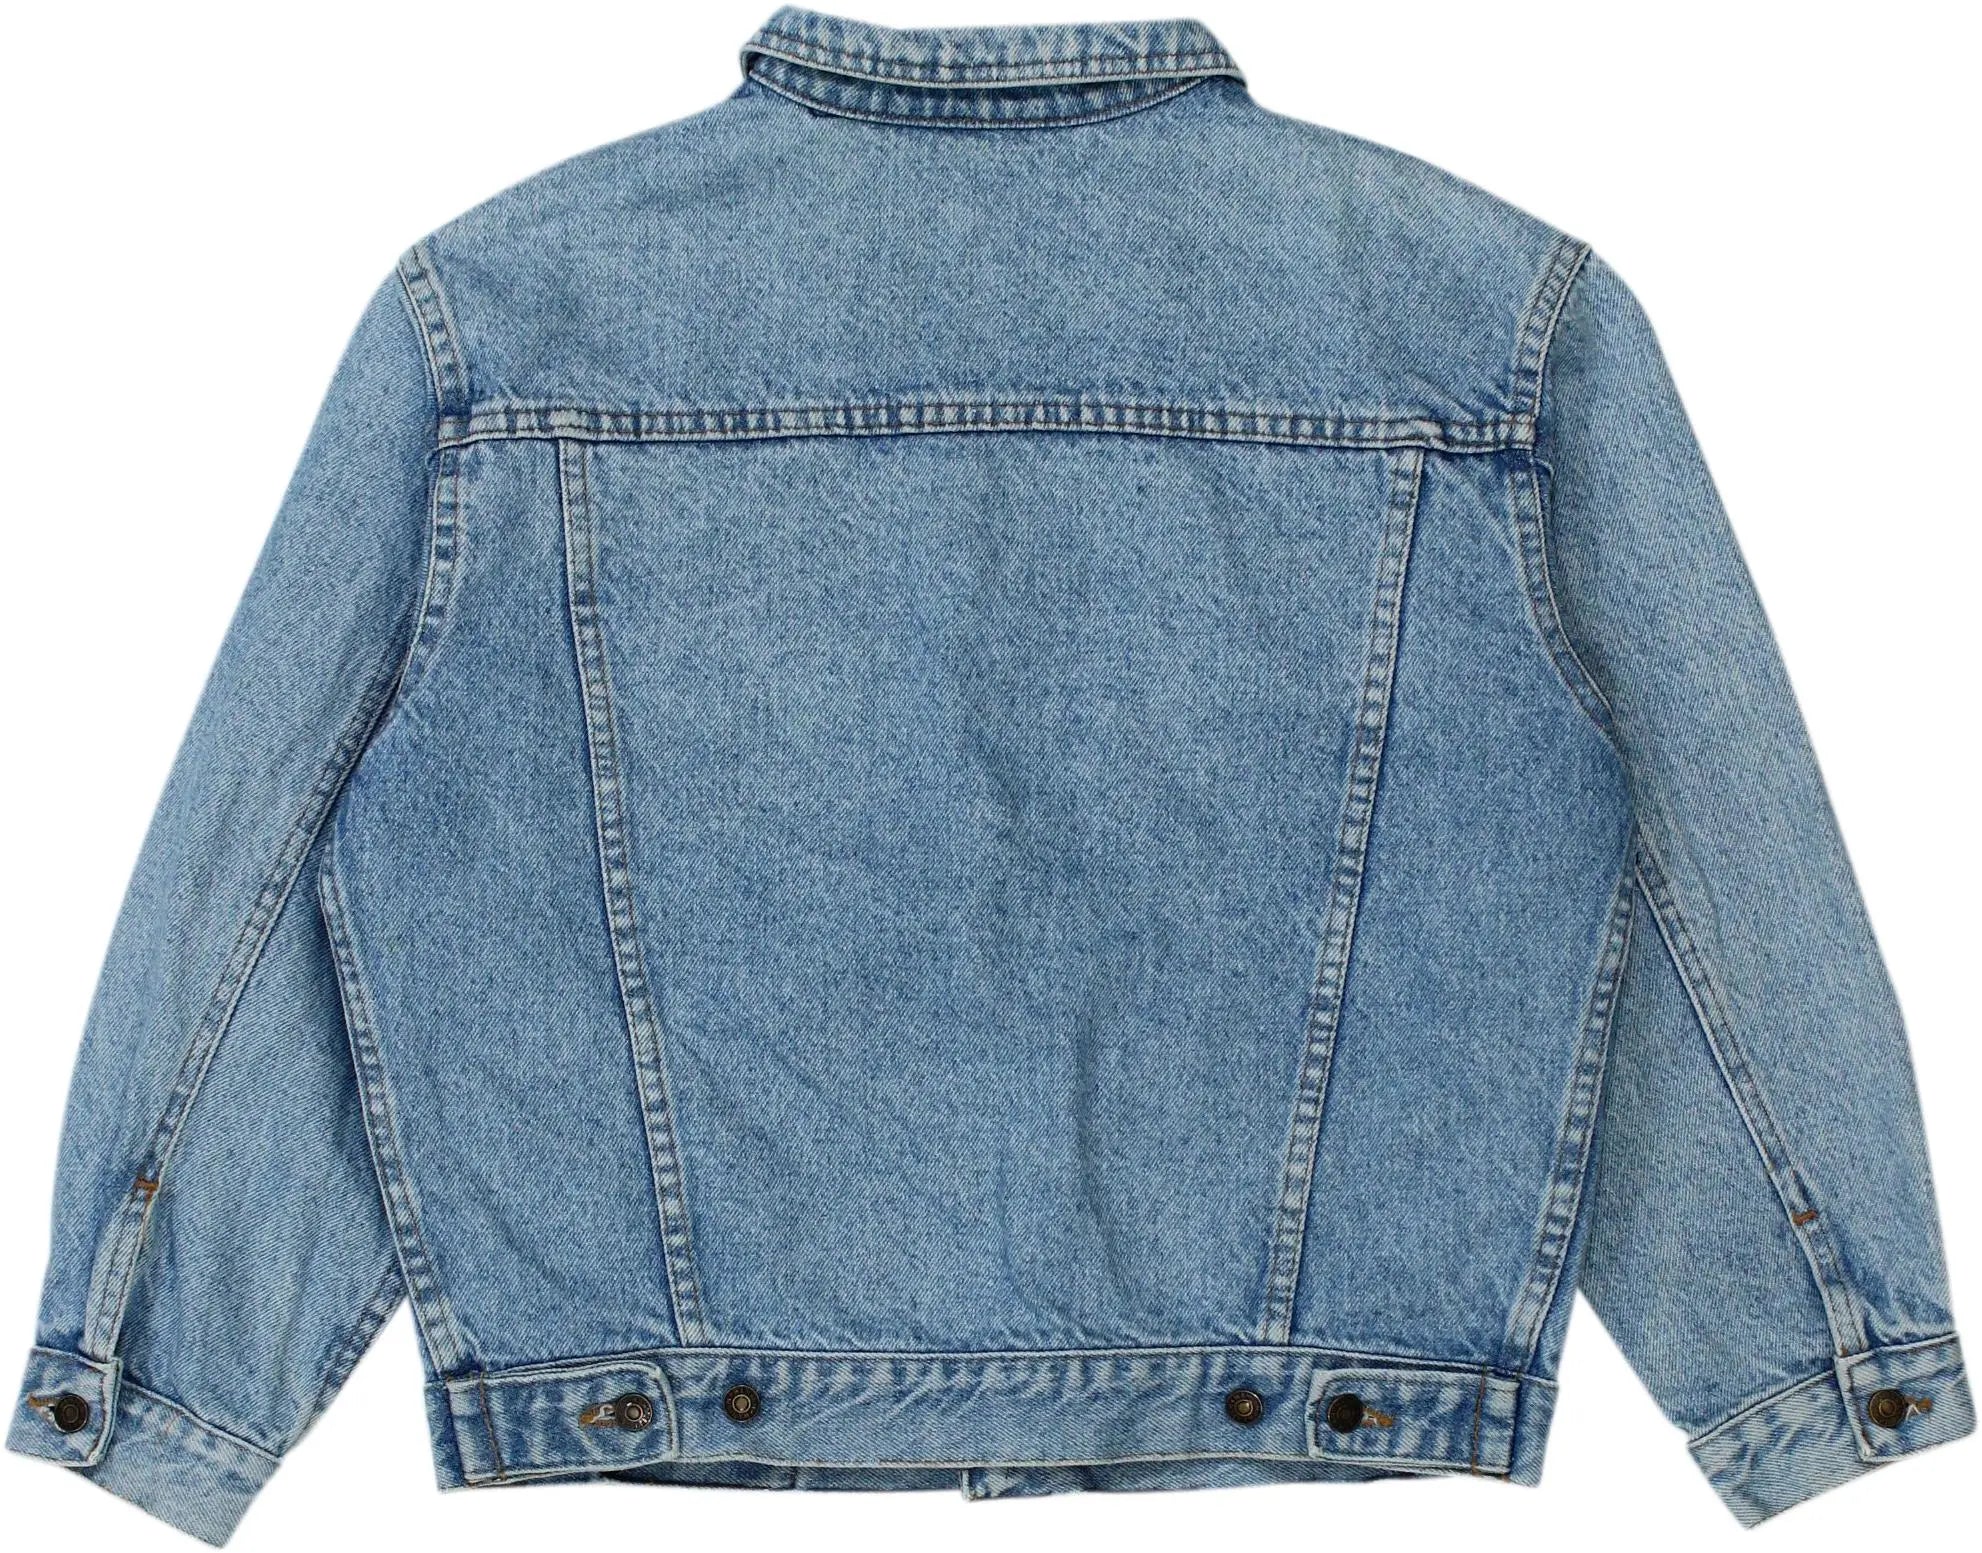 Wampum - Denim Jacket by Wampum- ThriftTale.com - Vintage and second handclothing